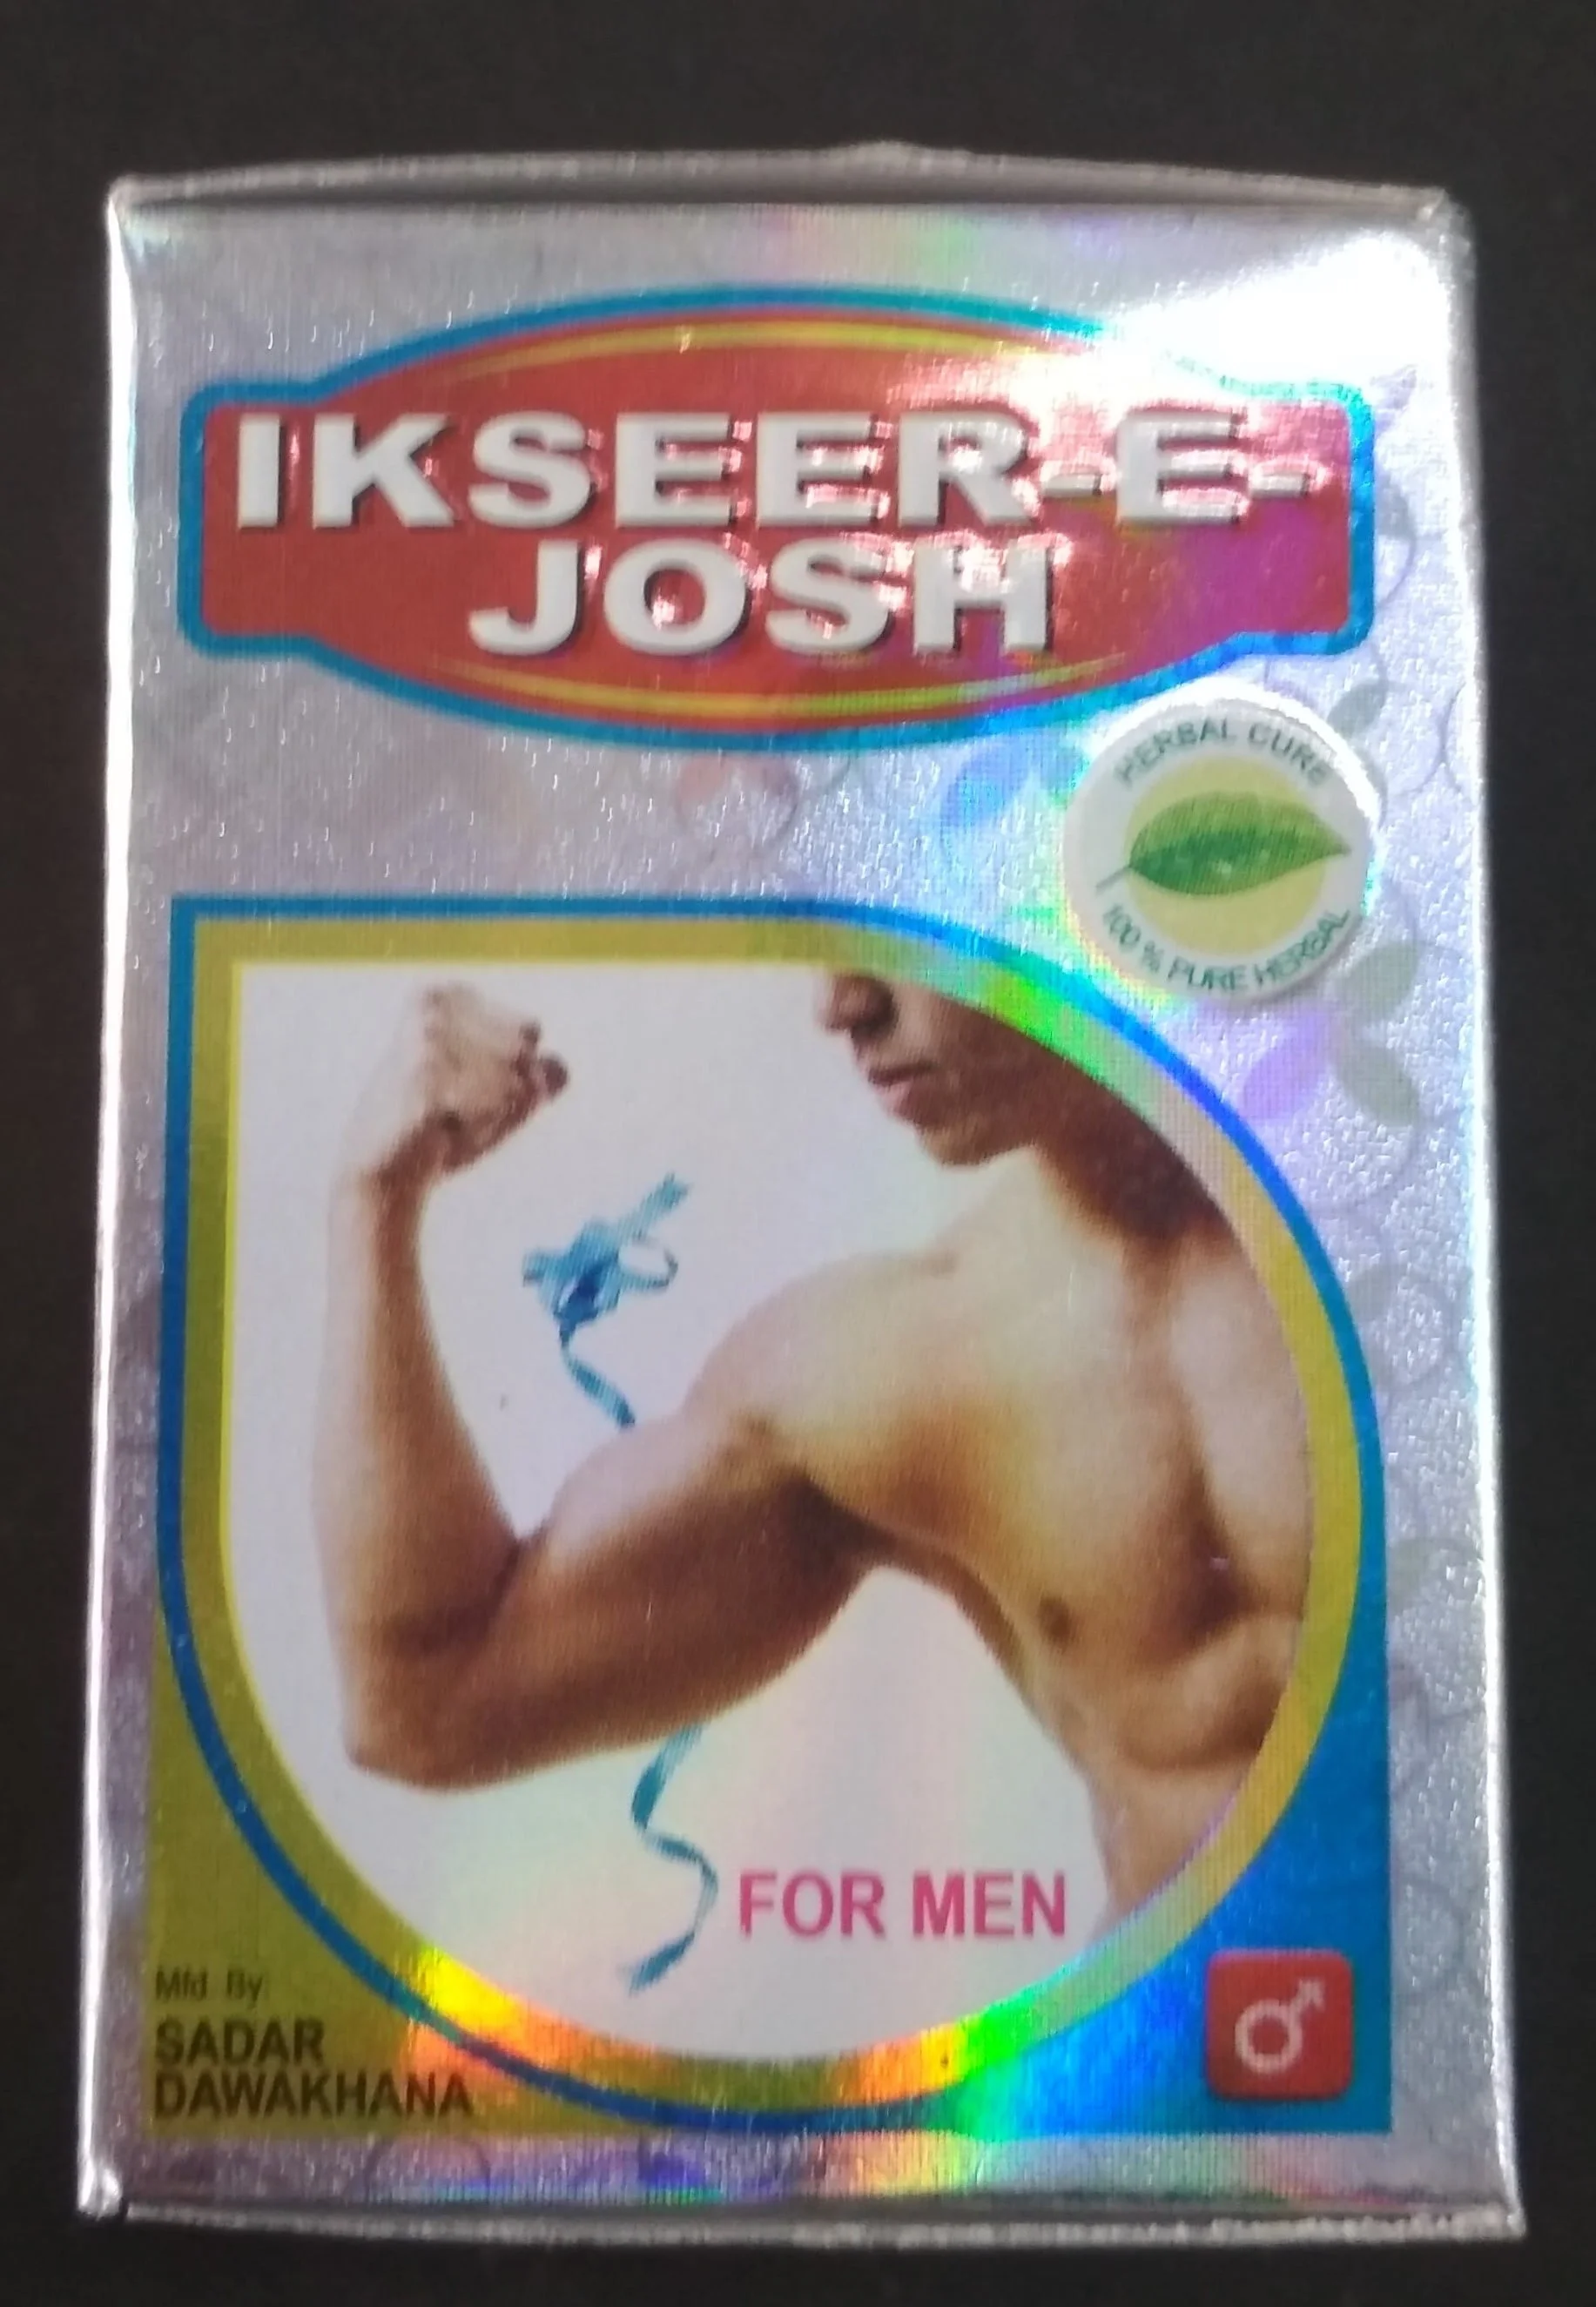 ikseer-E-josh tablets 80 tab Sadar Dawakhana